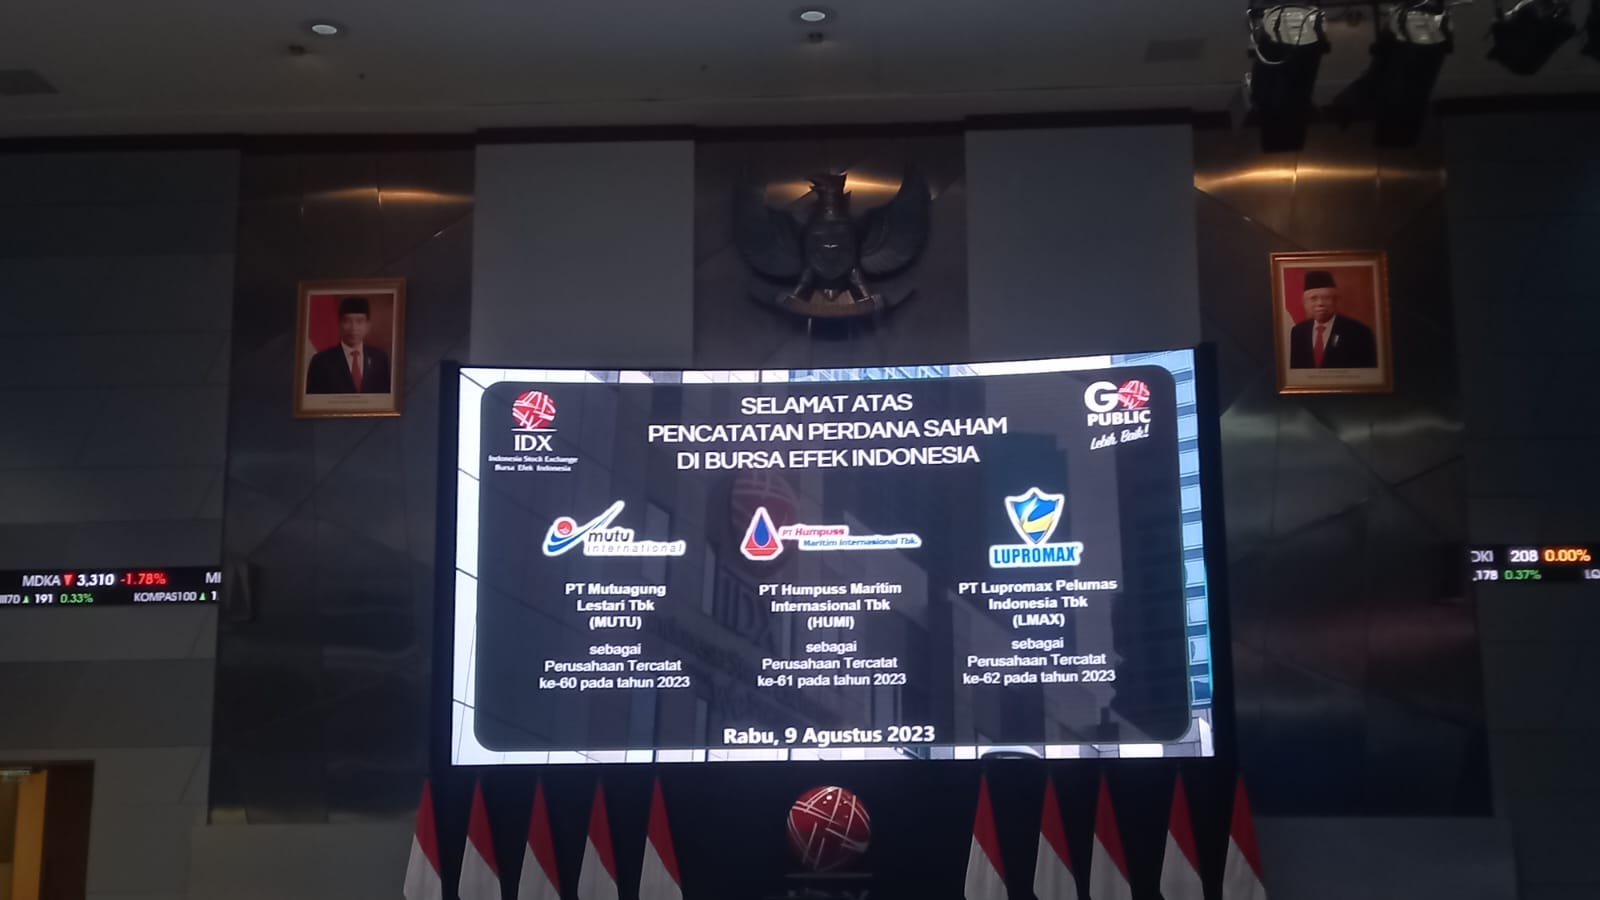 Pencatatan perdana saham di Bursa Efek Indonesia 9 Agustus 2023. 